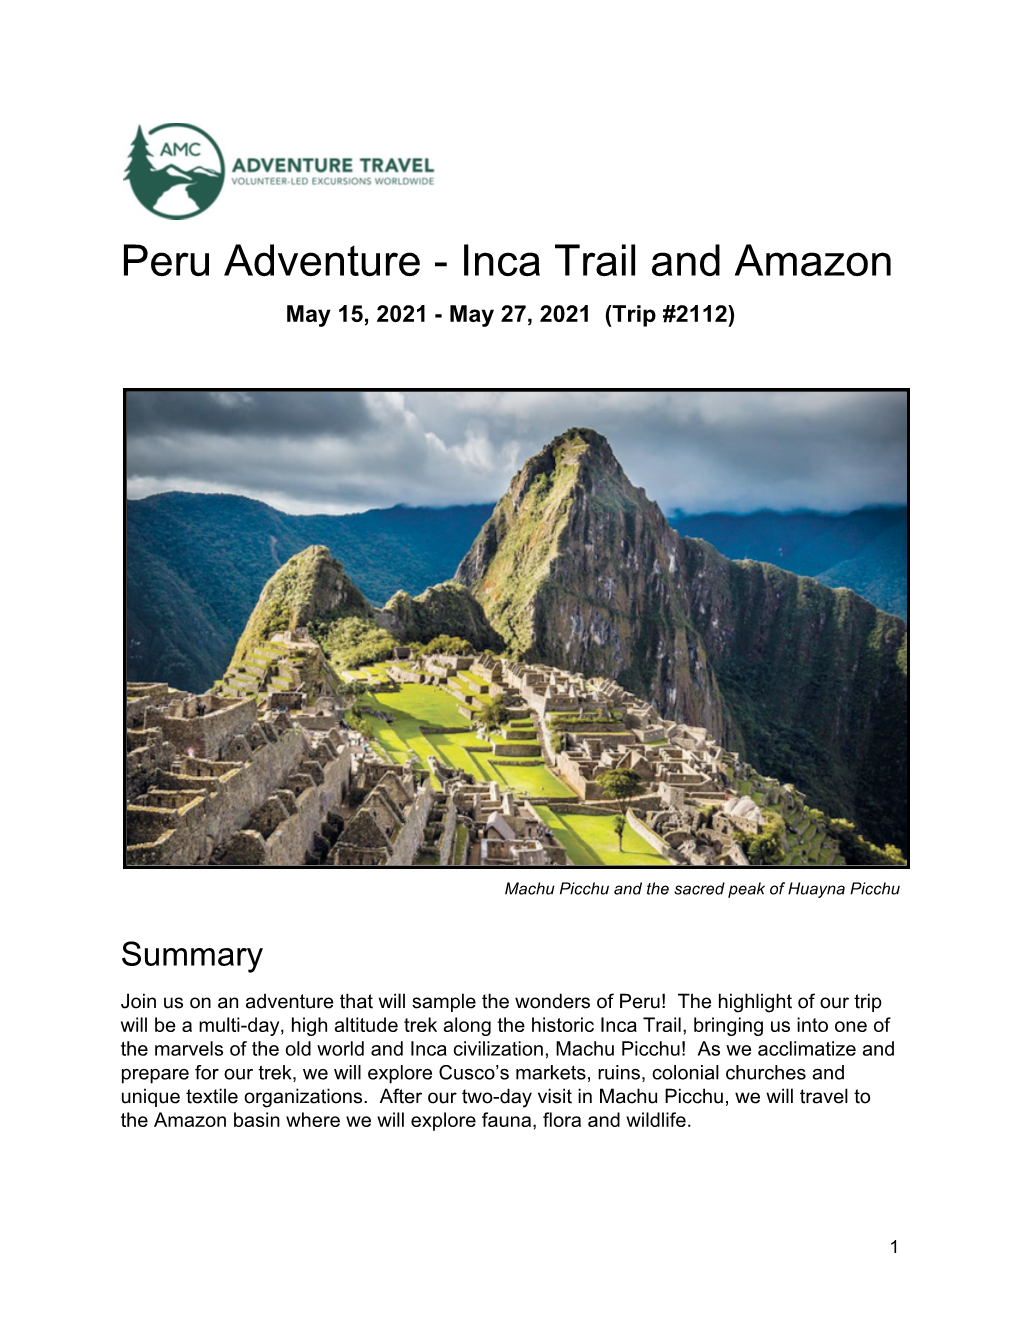 Peru Adventure - Inca Trail and Amazon May 15, 2021 - May 27, 2021 (Trip #2112)